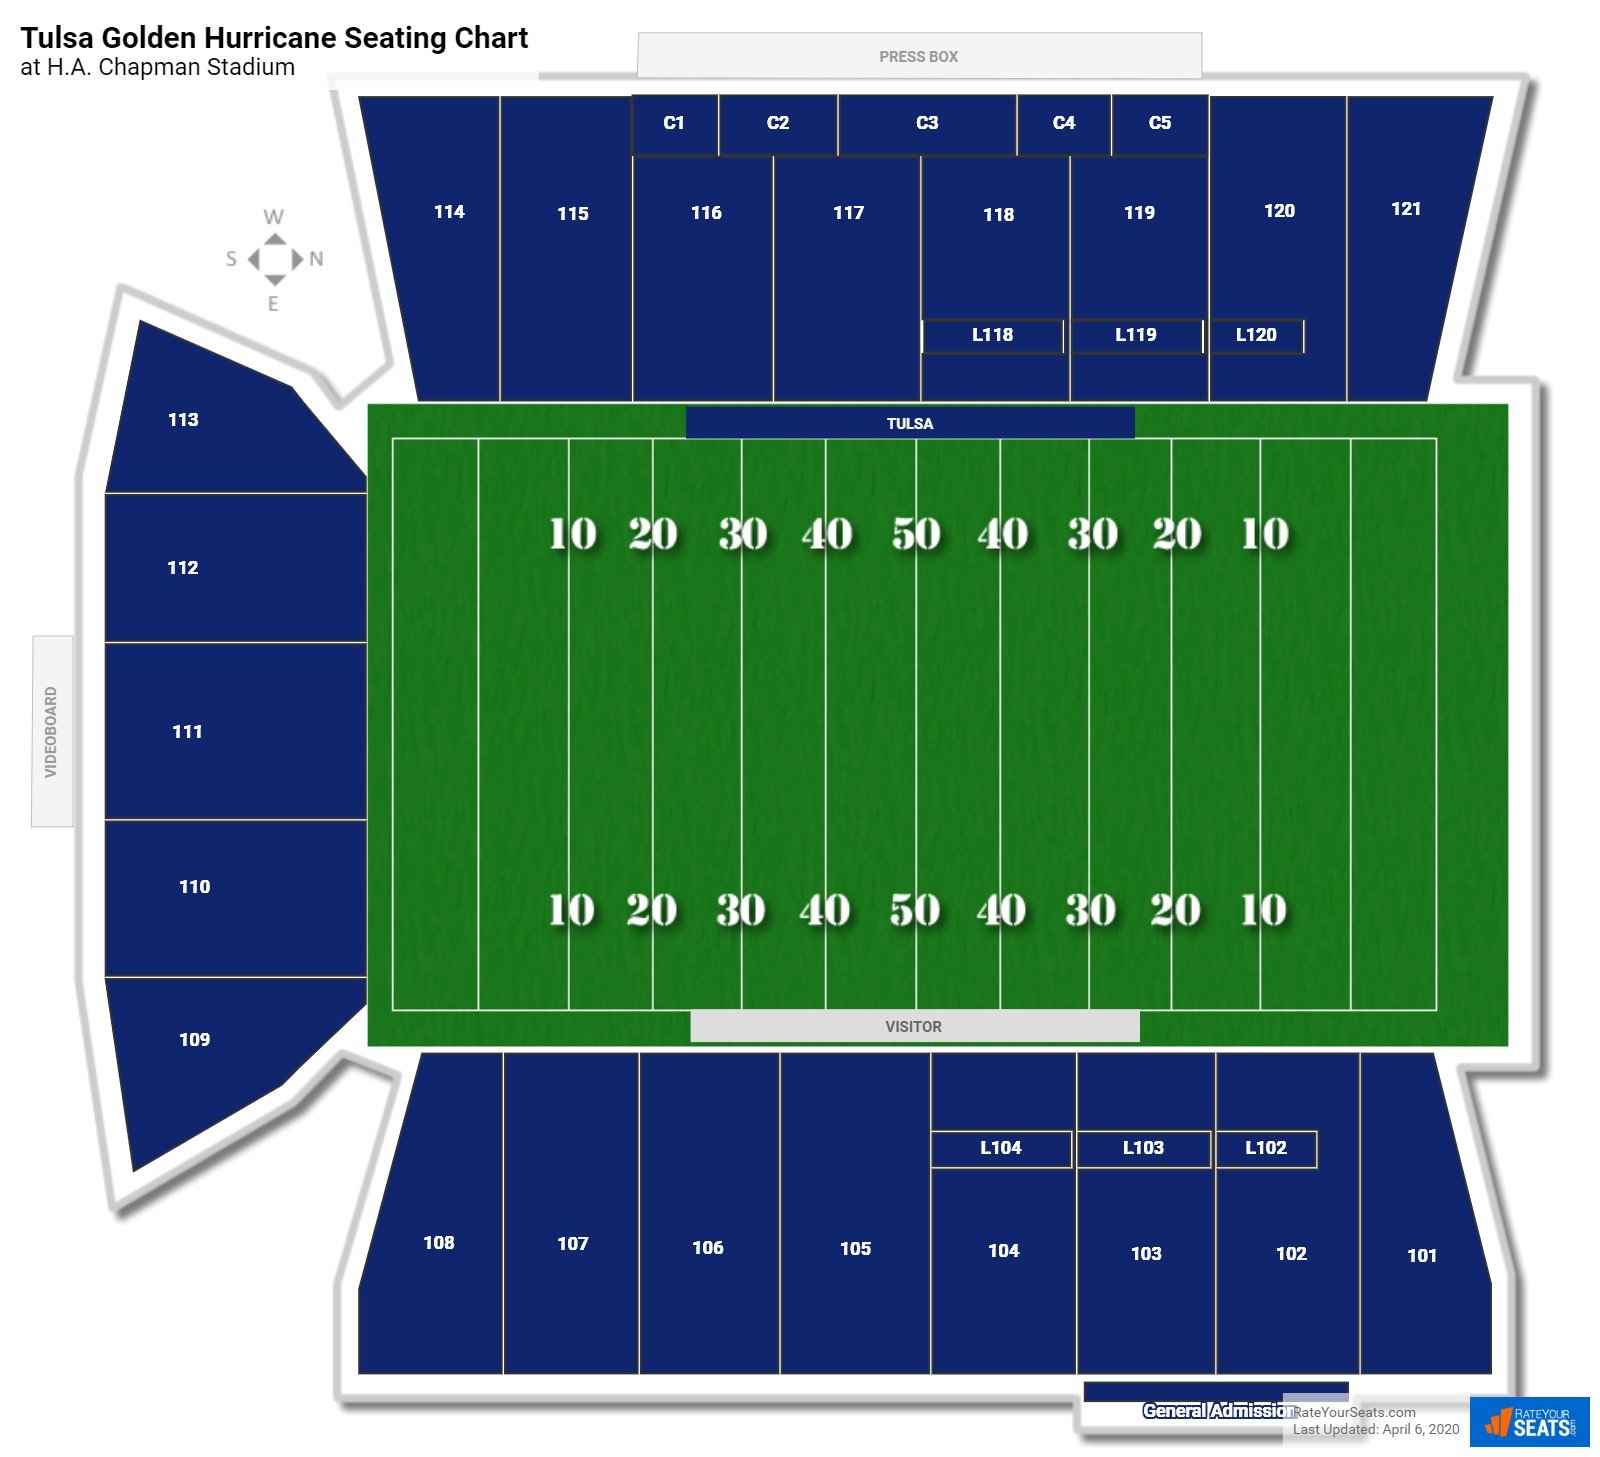 H.A. Chapman Stadium Seating Charts